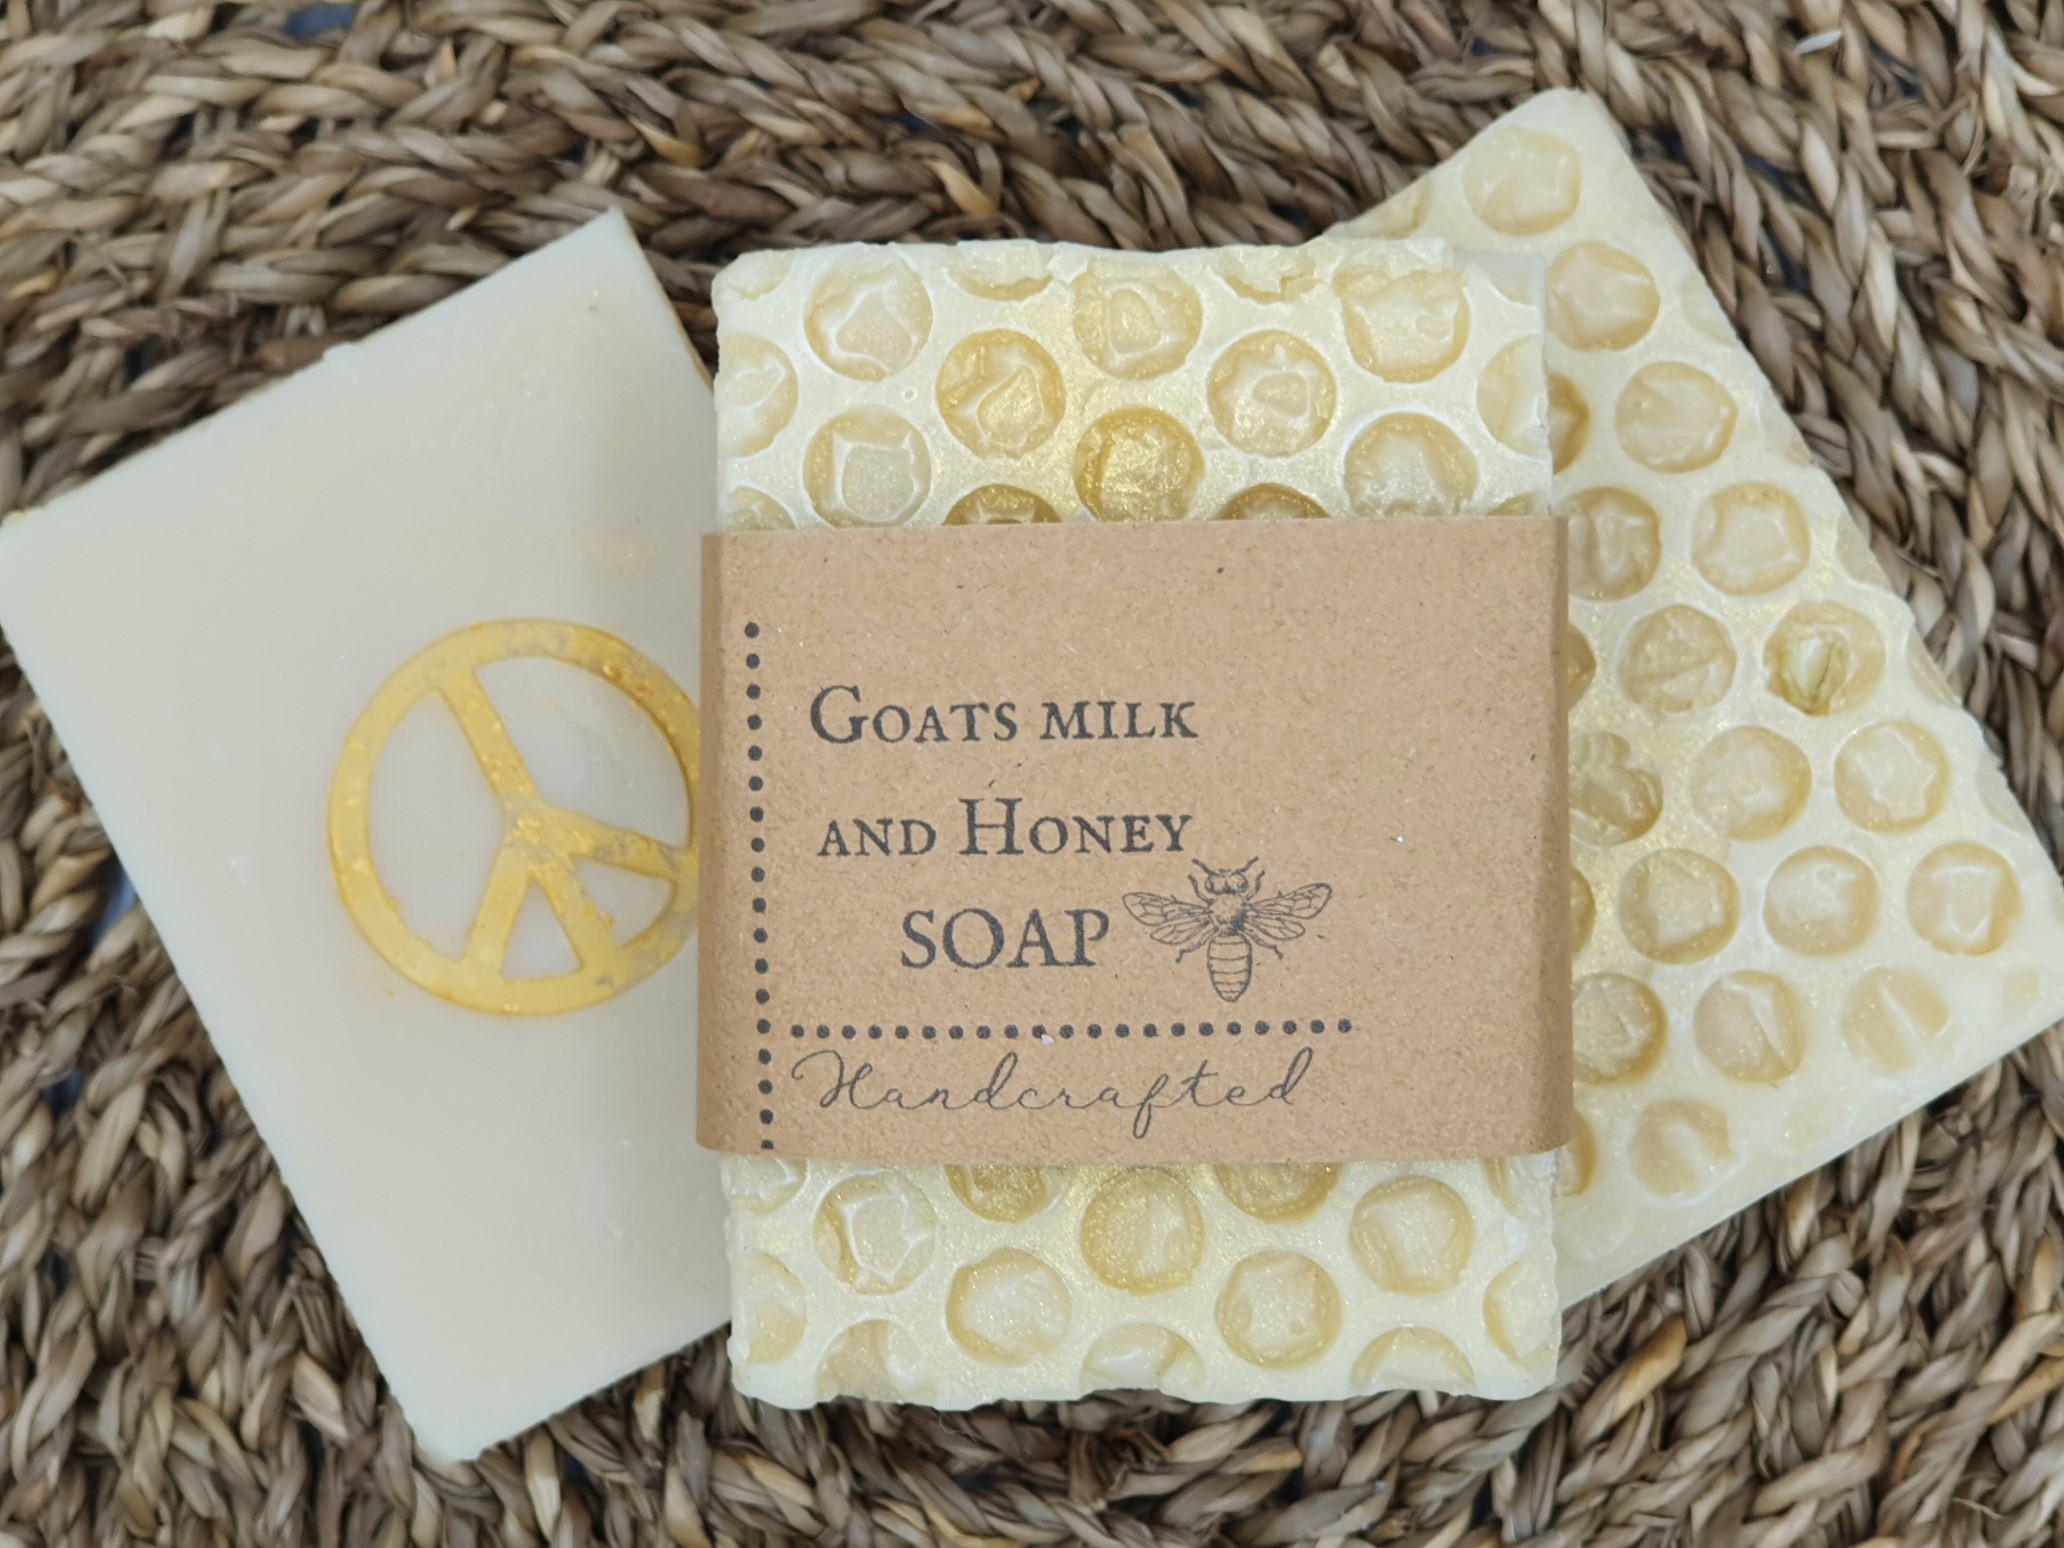 Goats milk and Honey soap